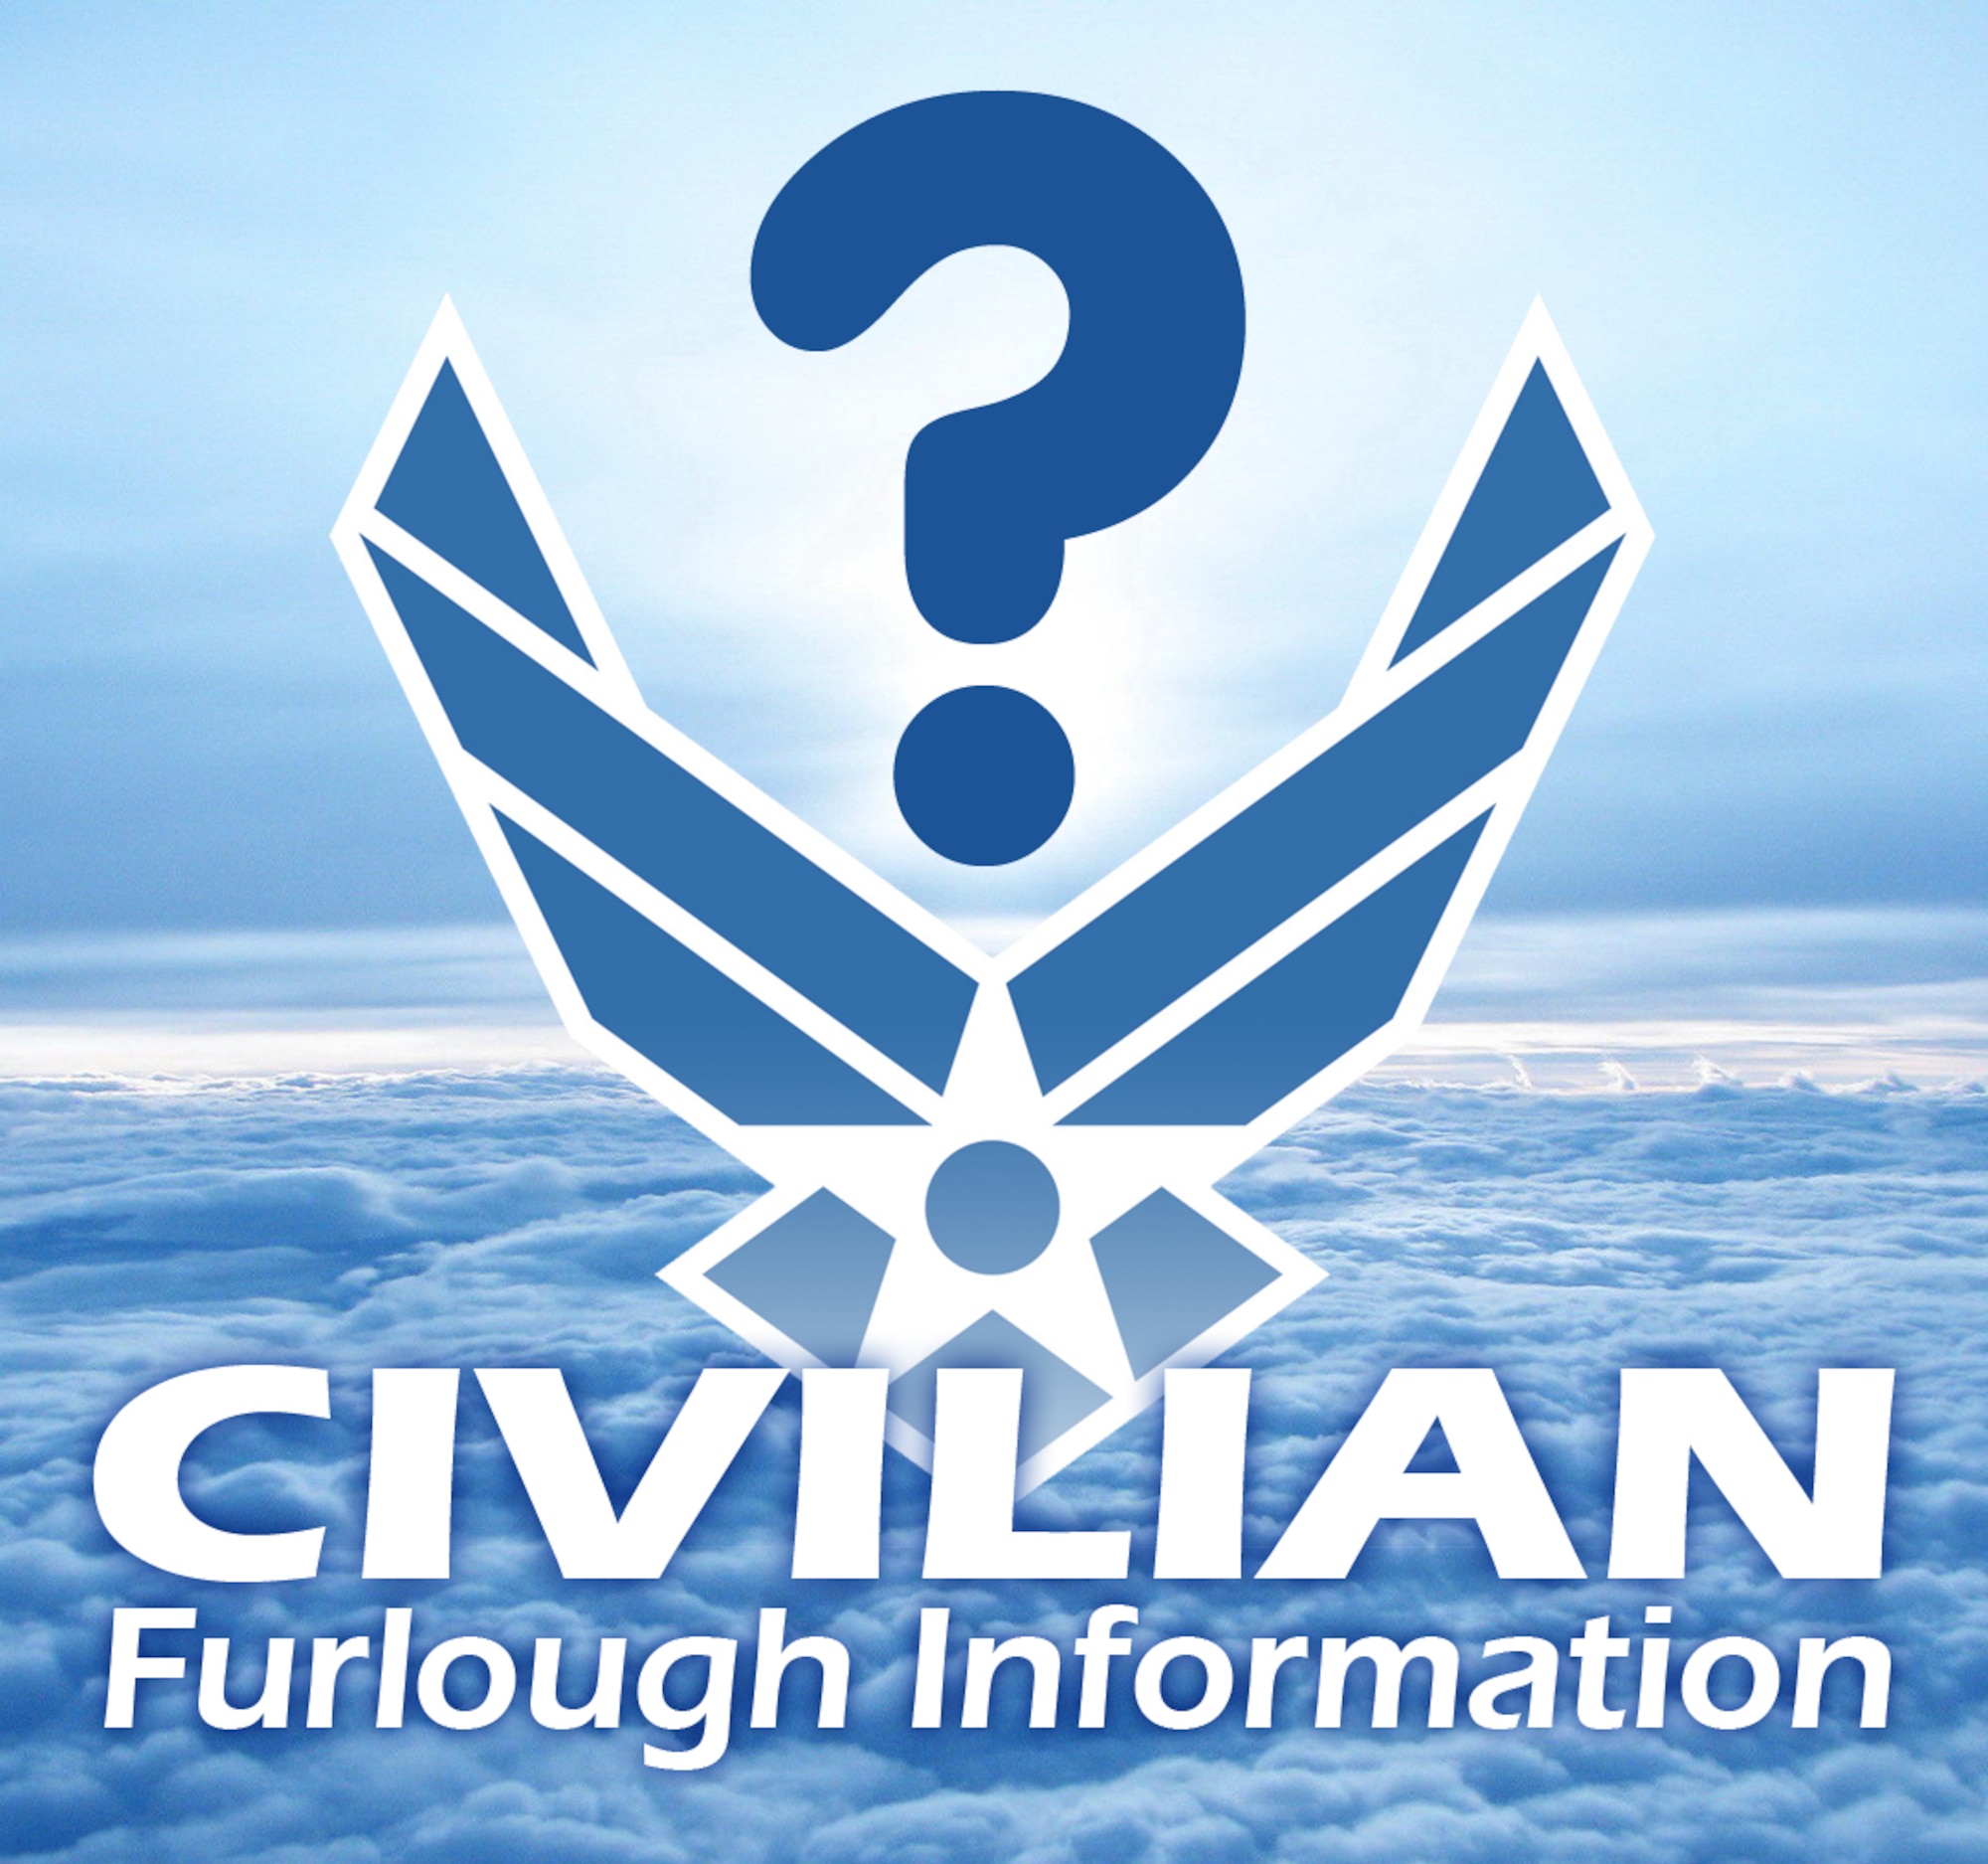 Civilian Furlough Information